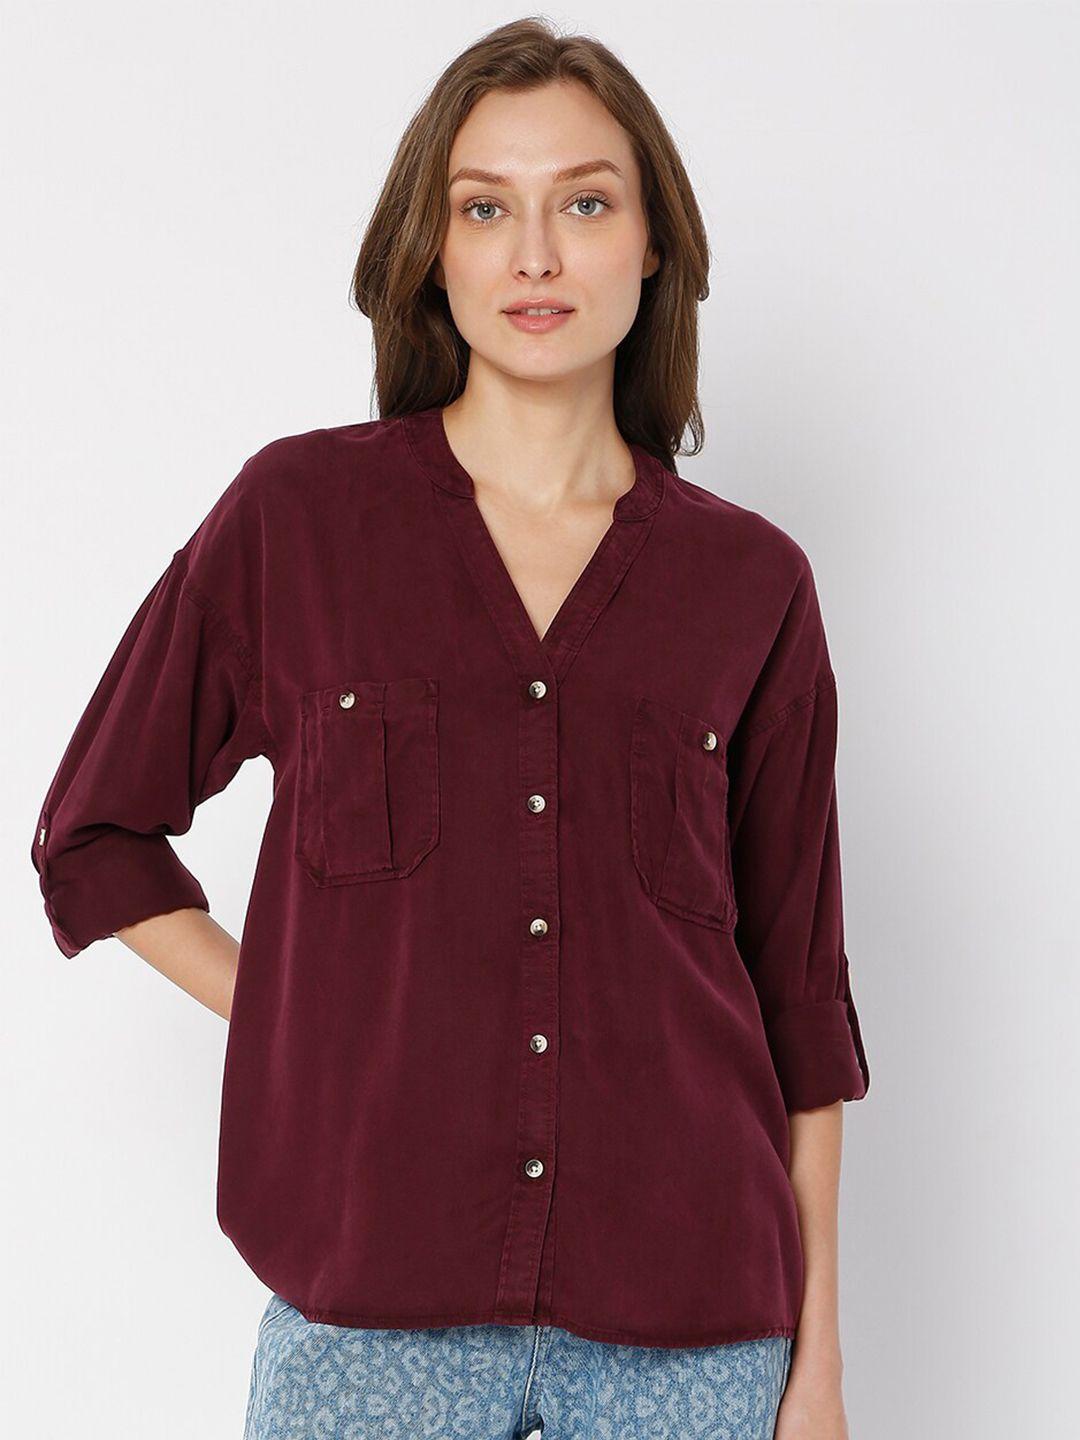 vero moda maroon roll-up sleeves shirt style top